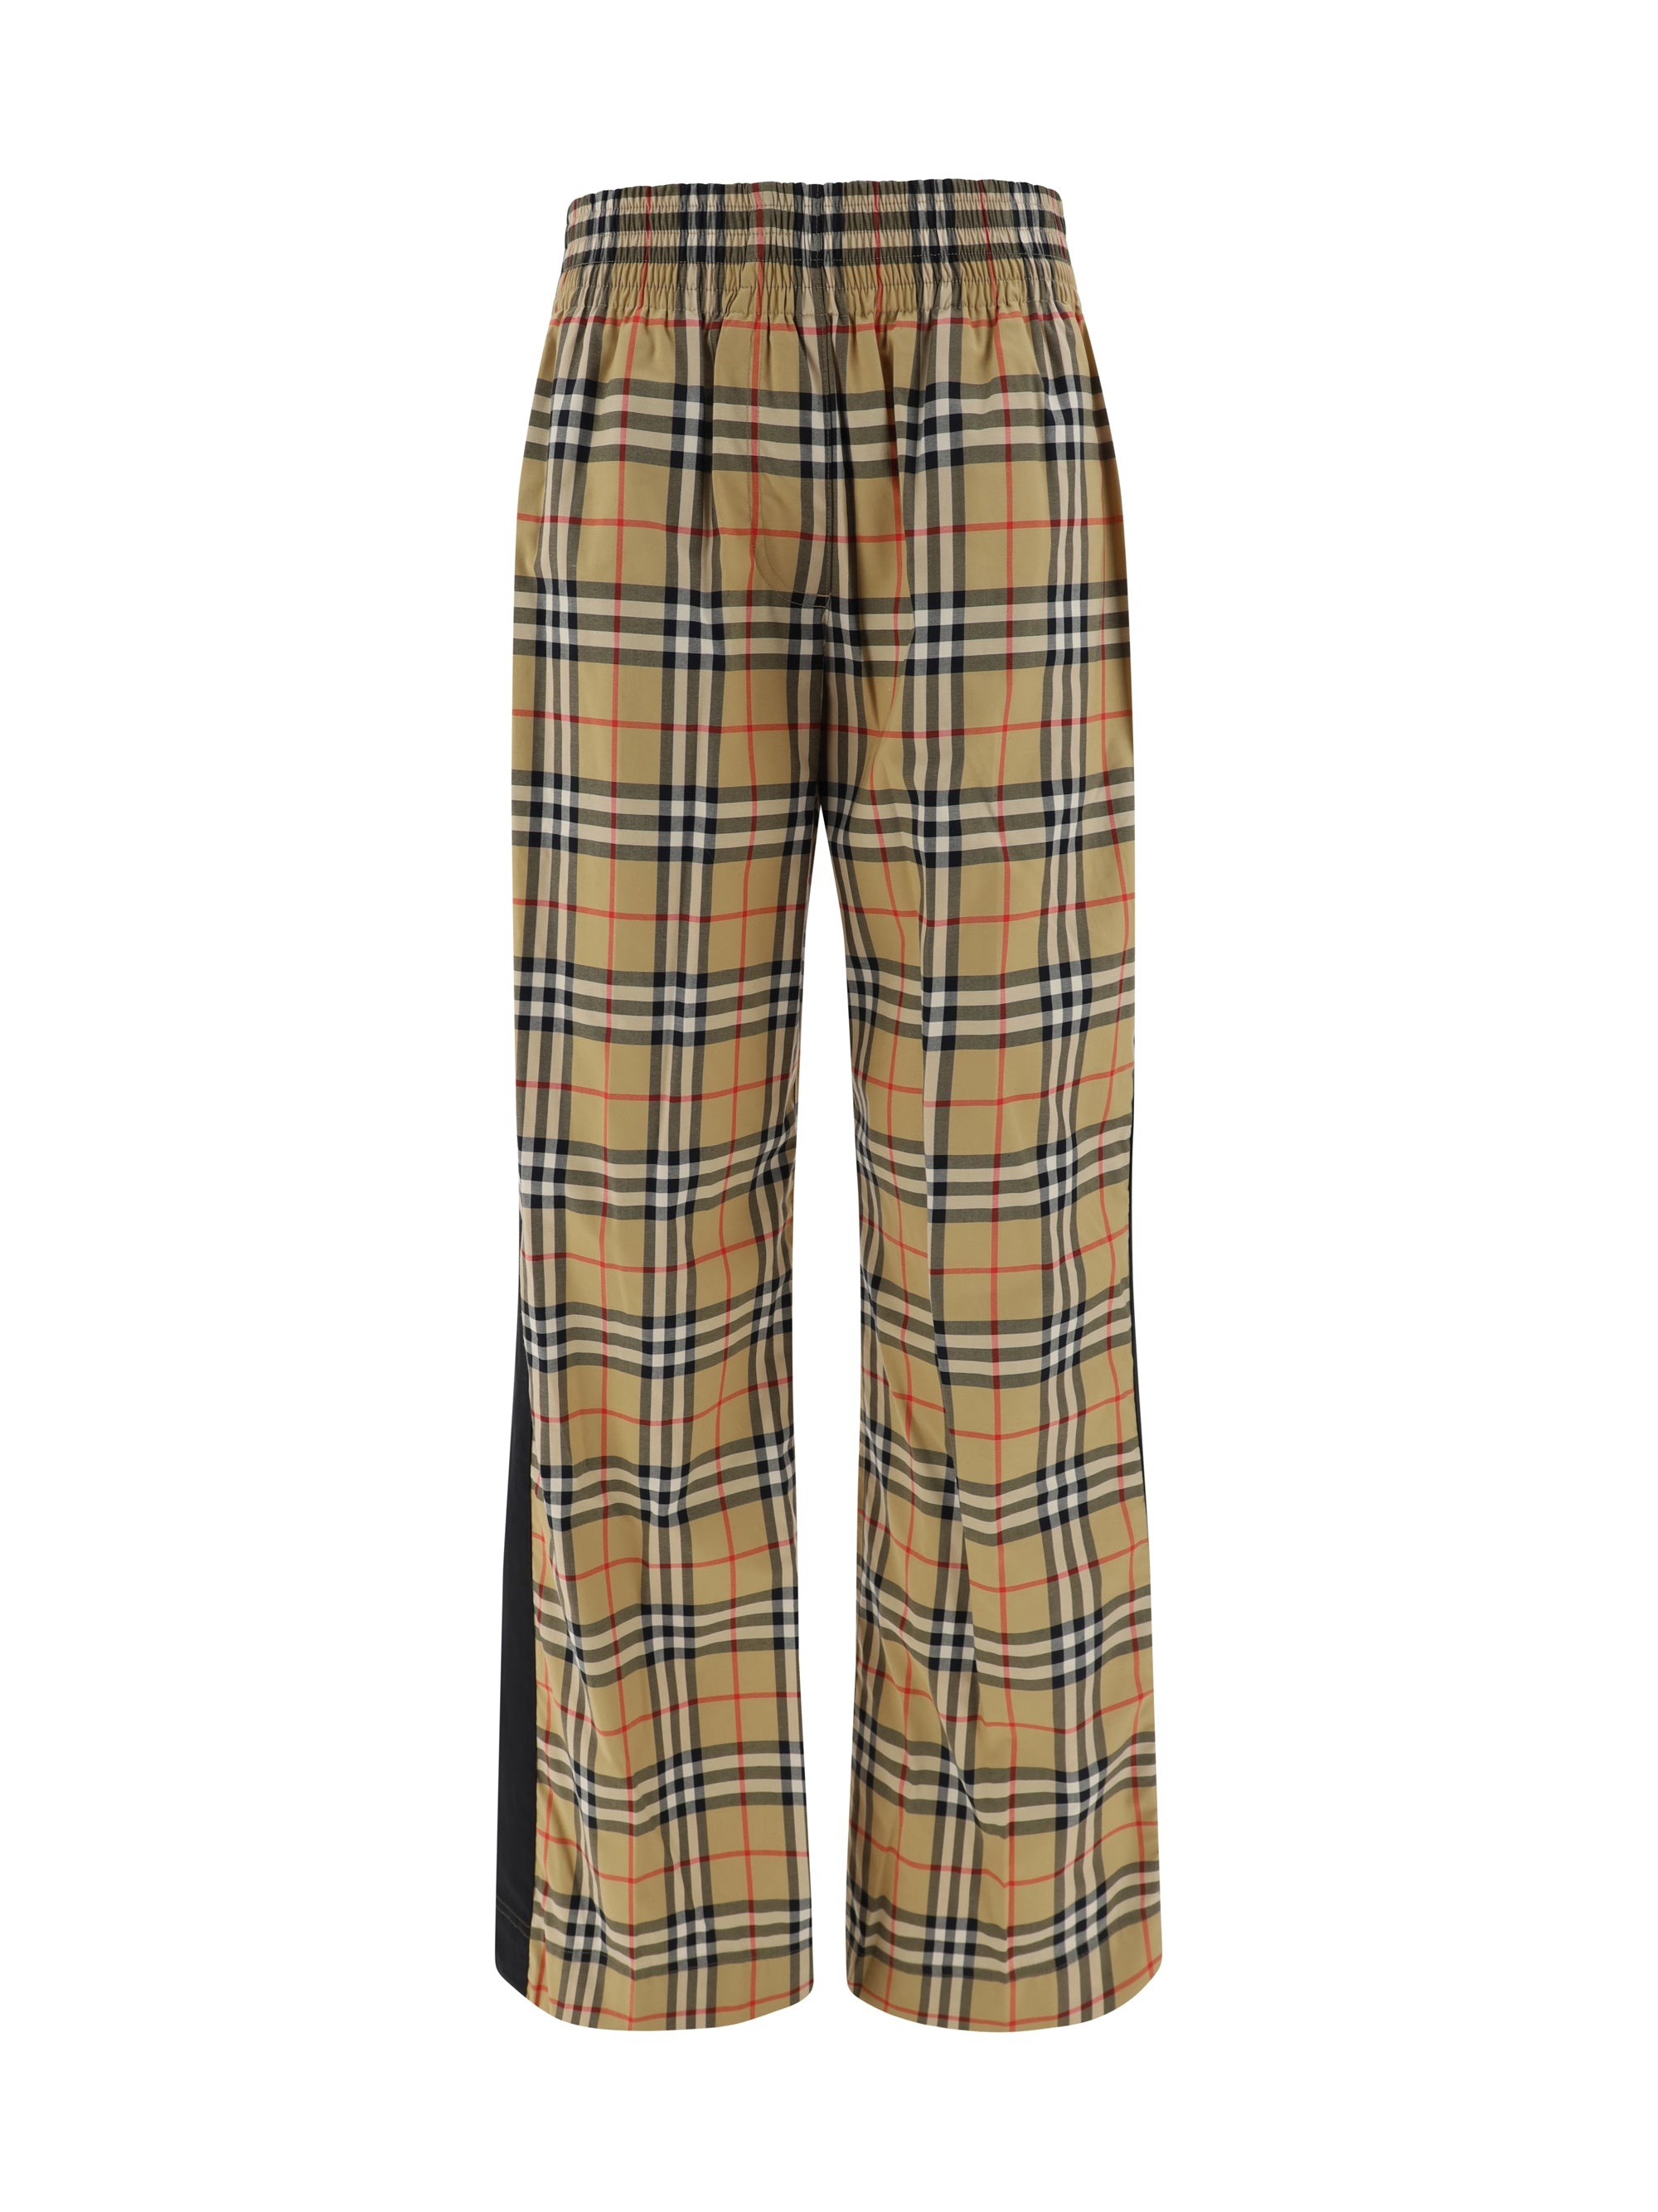 Burberry Women Pants - 1